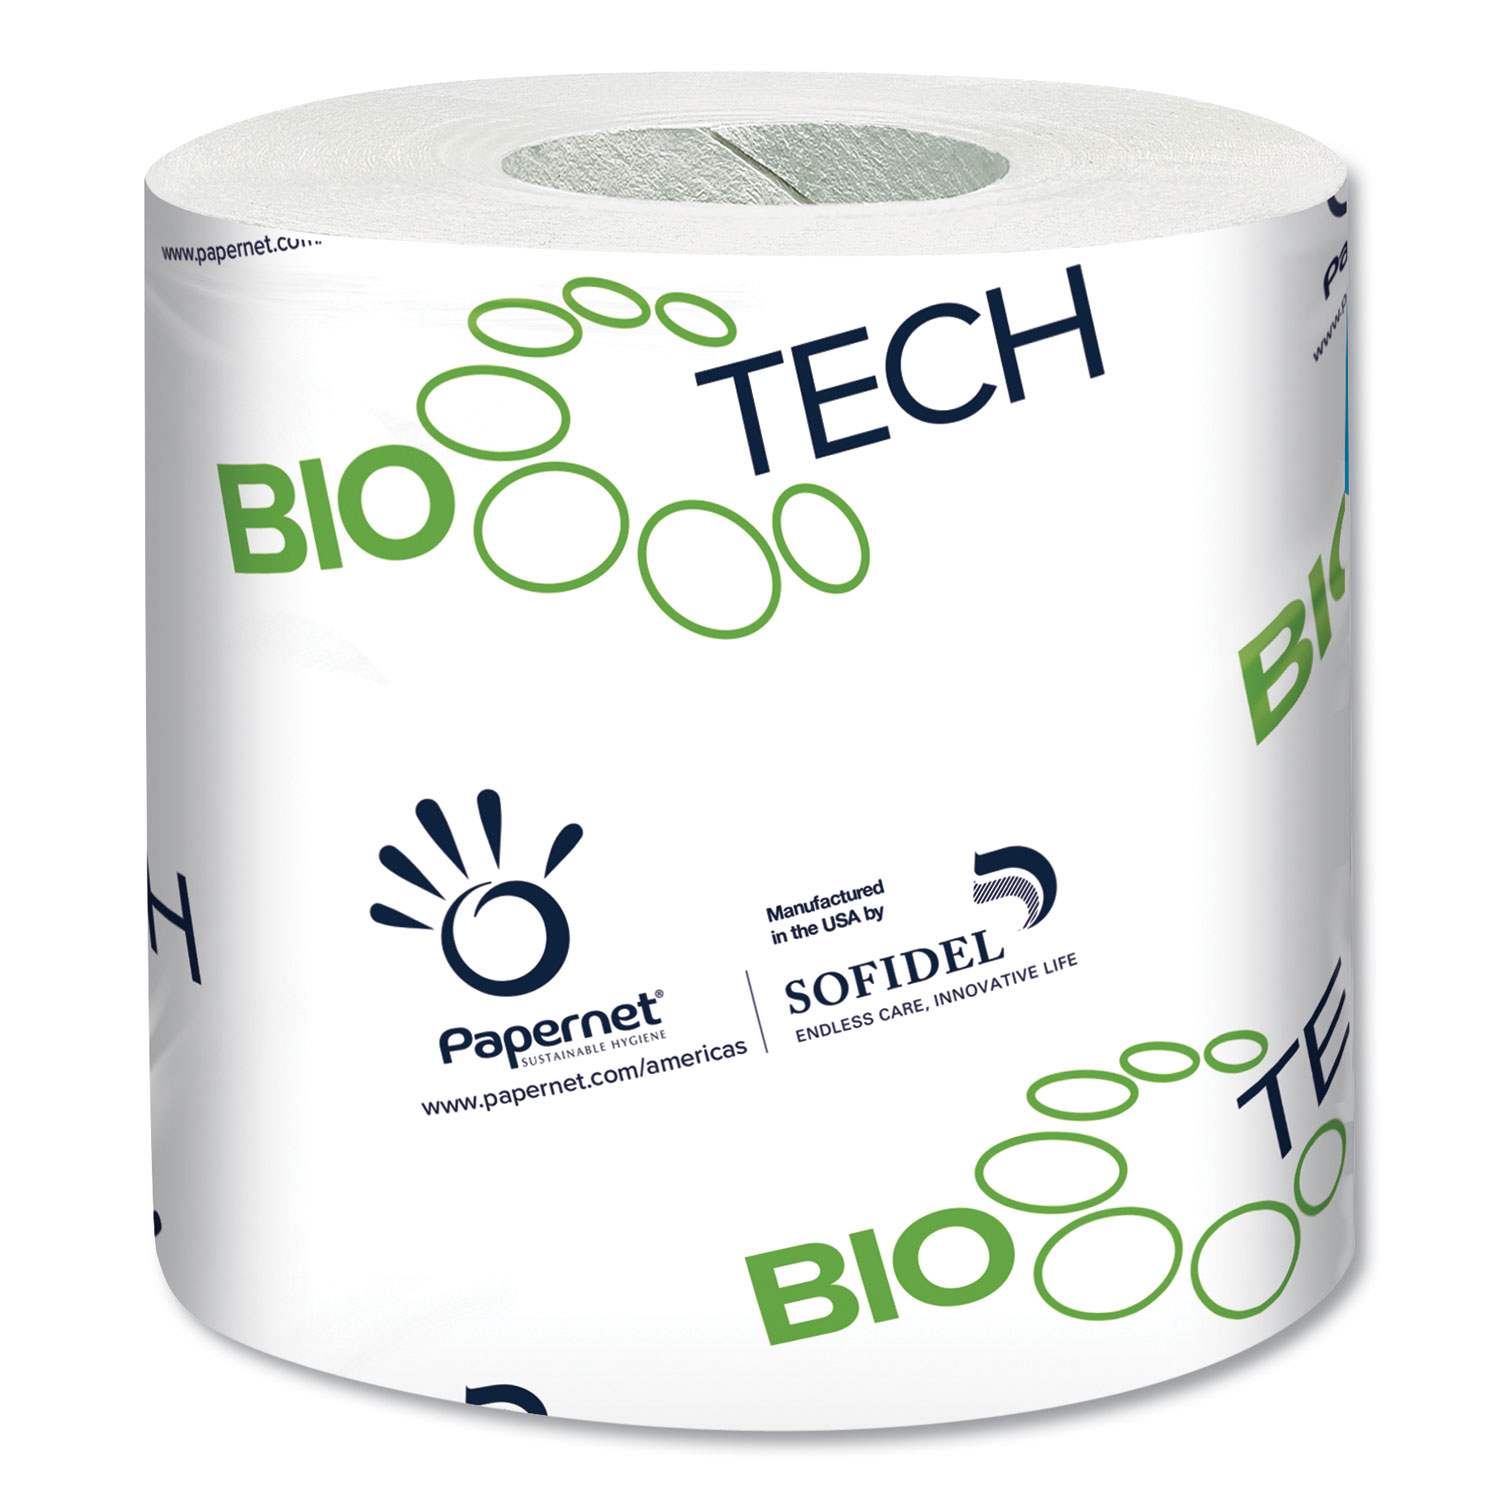 BioTech Toilet Tissue, 2-Ply, 500 Sheets/Roll, 96 Rolls/Carton